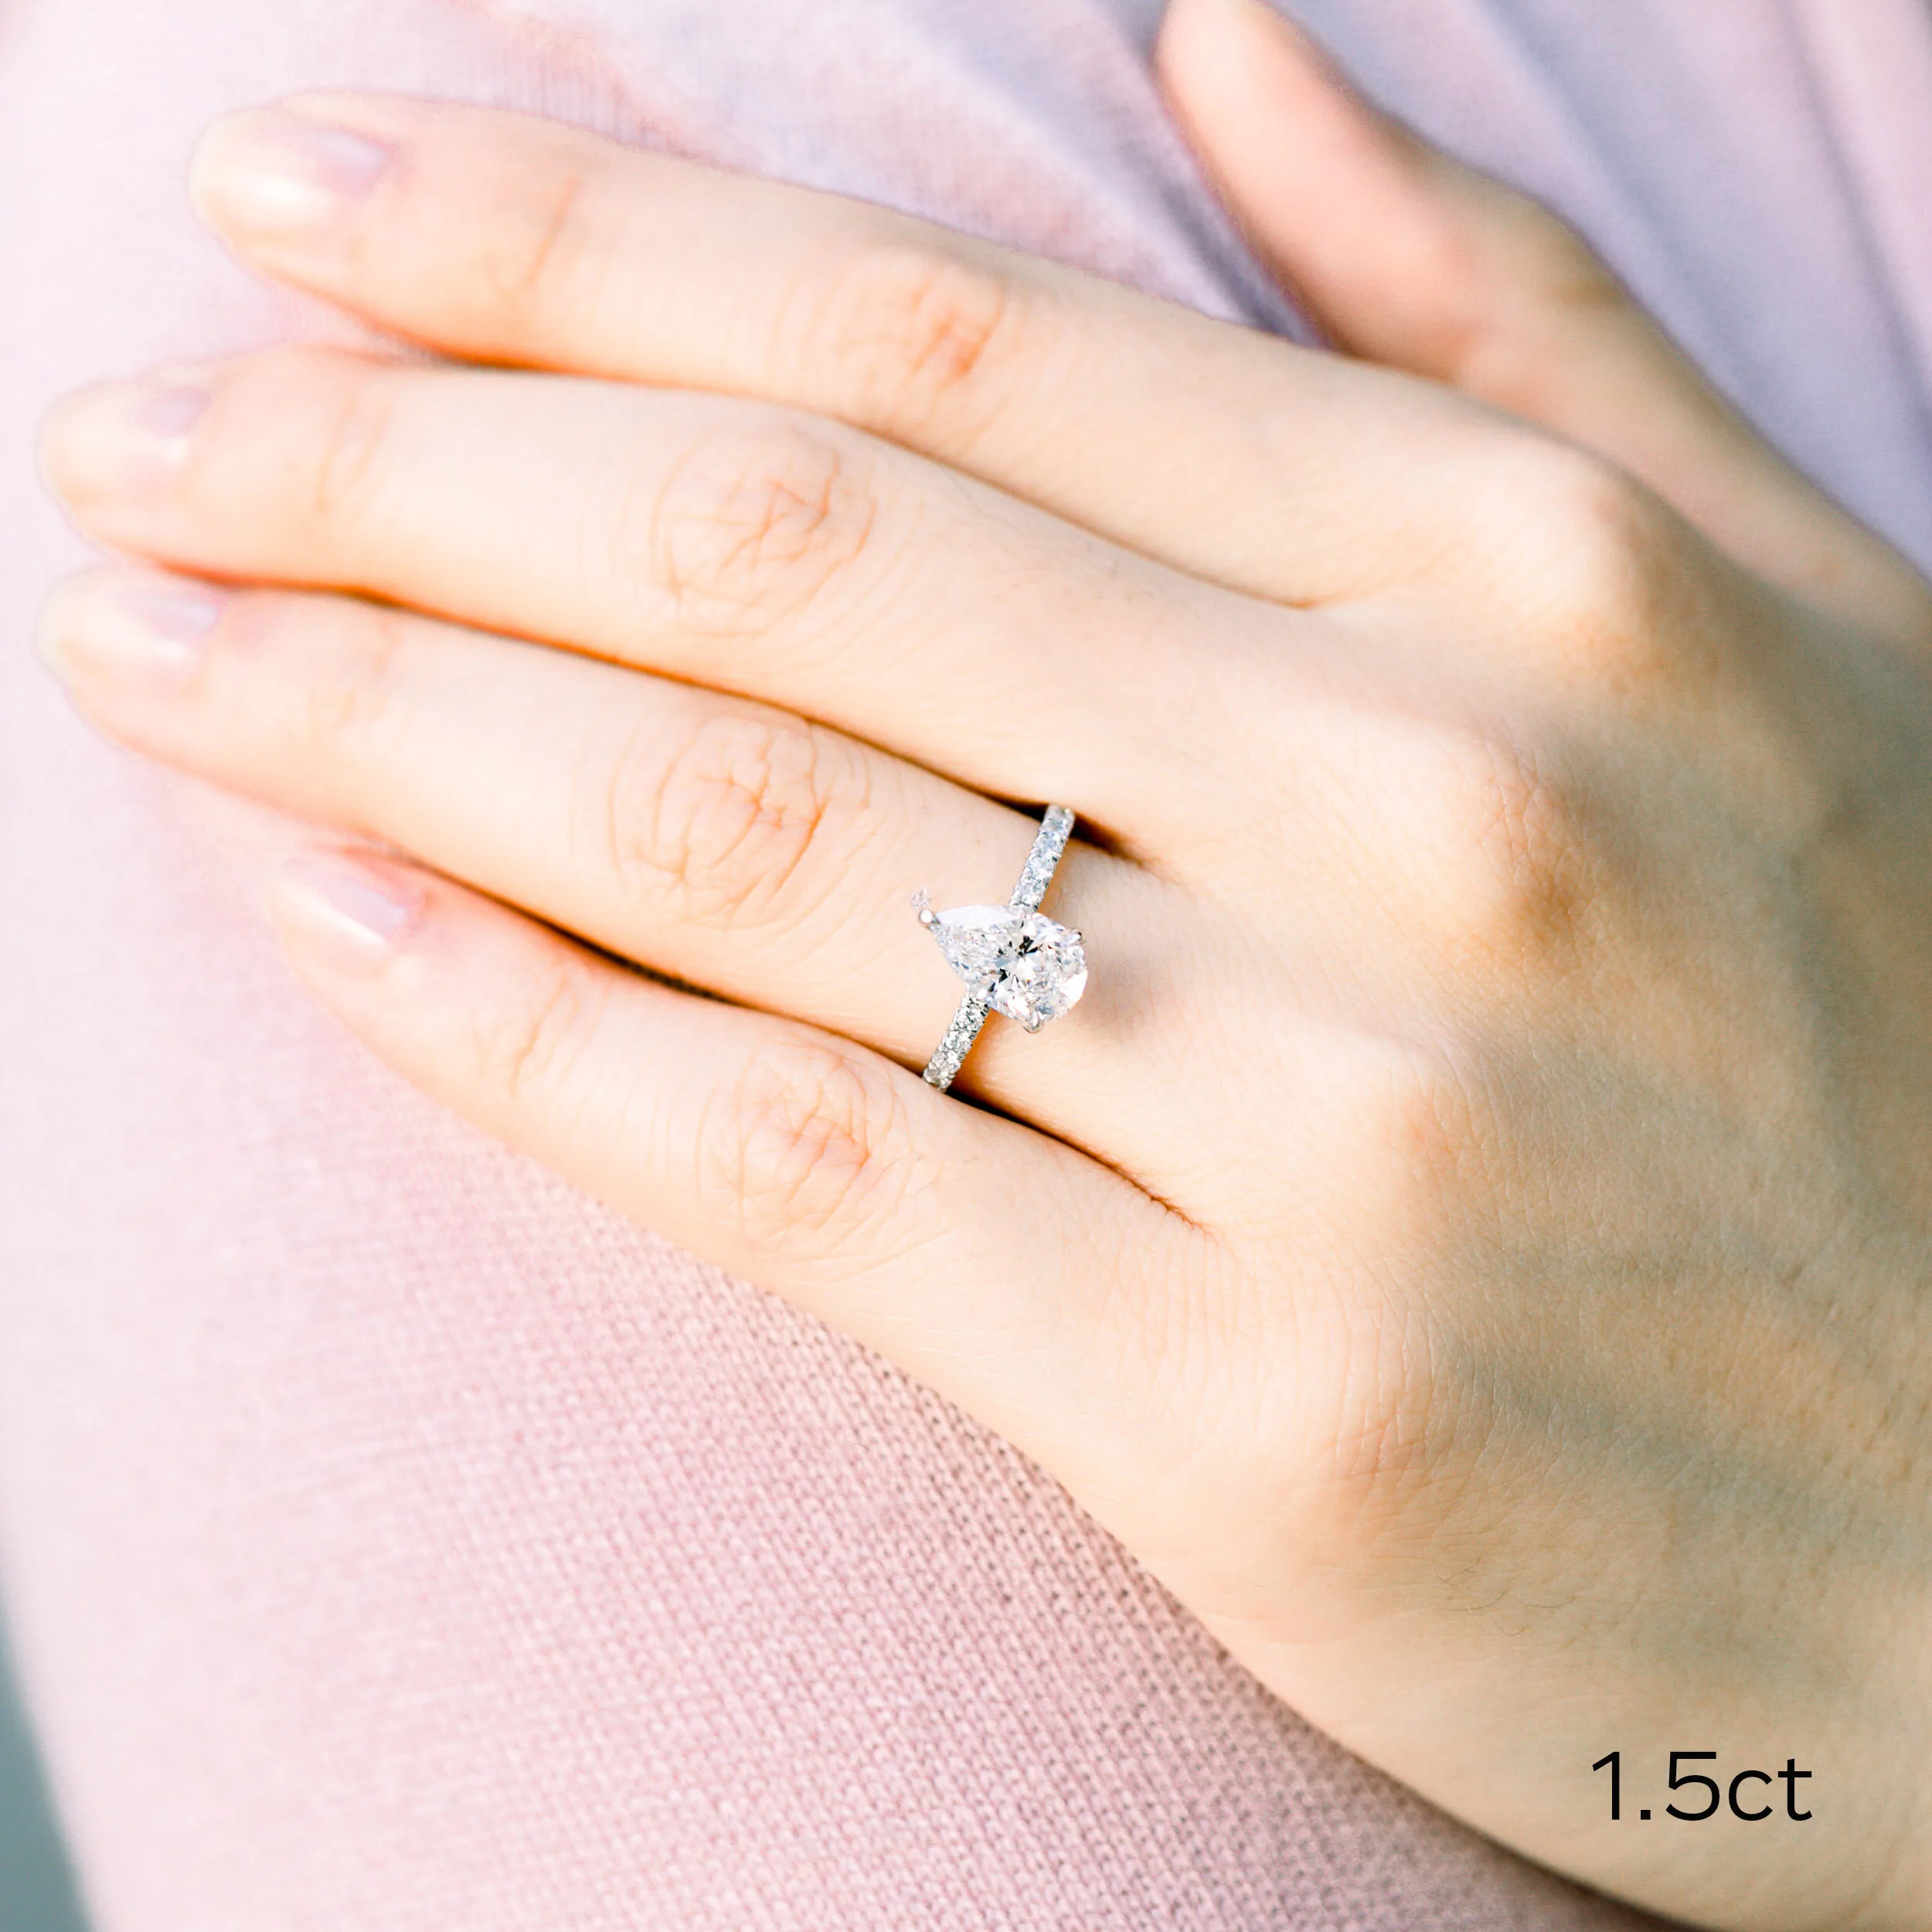 Platinum 1.5ct Pear Cut Lab Diamond Engagement Ring with Diamond Band Ada Diamonds Design AD-211 on Hand